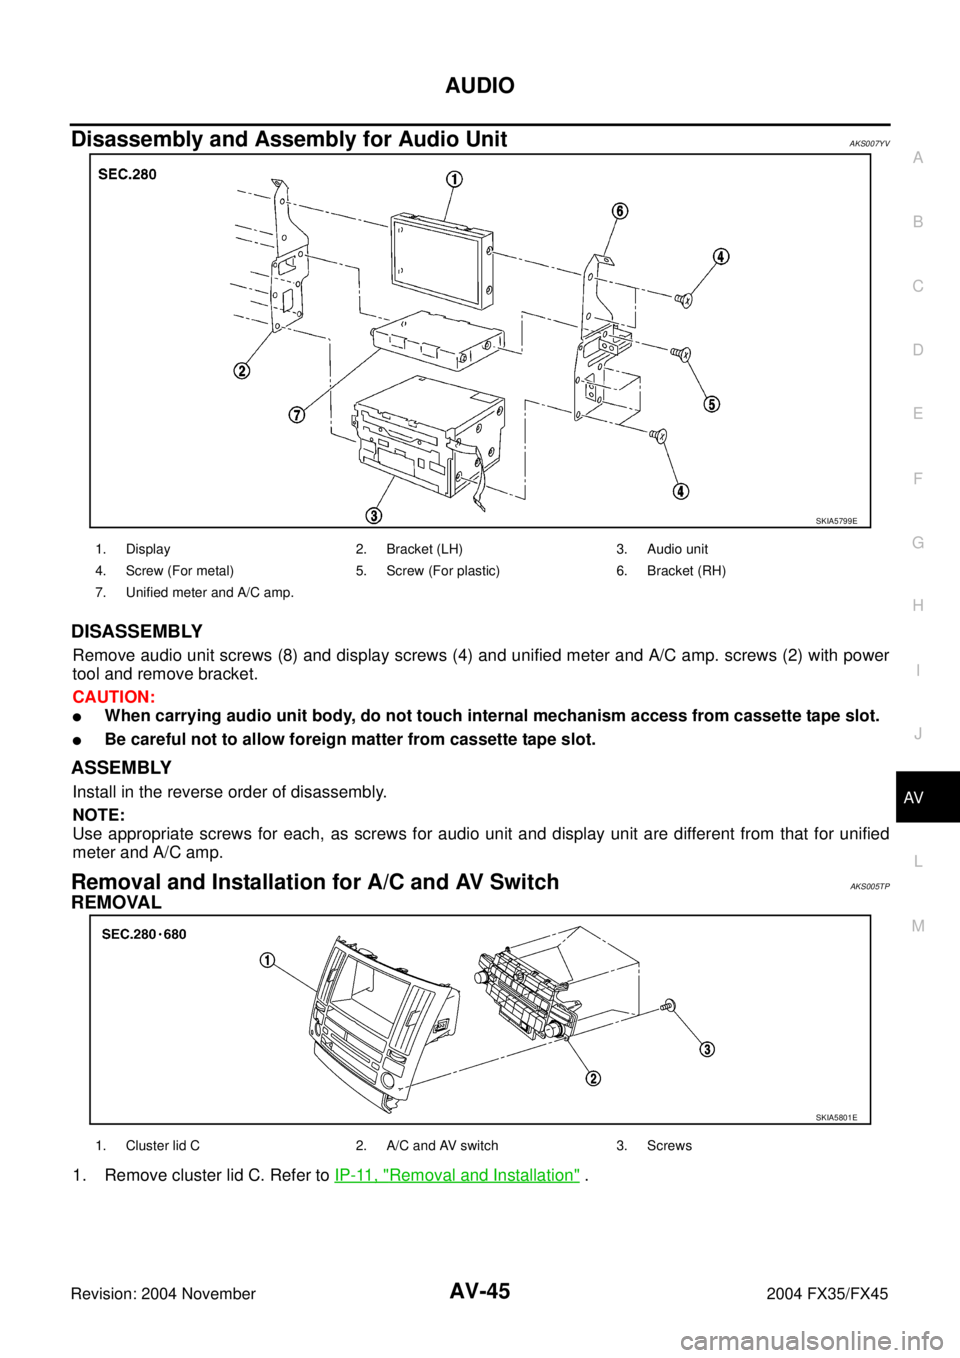 INFINITI FX35 2004  Service Manual AUDIO
AV-45
C
D
E
F
G
H
I
J
L
MA
B
AV
Revision: 2004 November 2004 FX35/FX45
Disassembly and Assembly for Audio UnitAKS007YV
DISASSEMBLY
Remove audio unit screws (8) and display screws (4) and unified